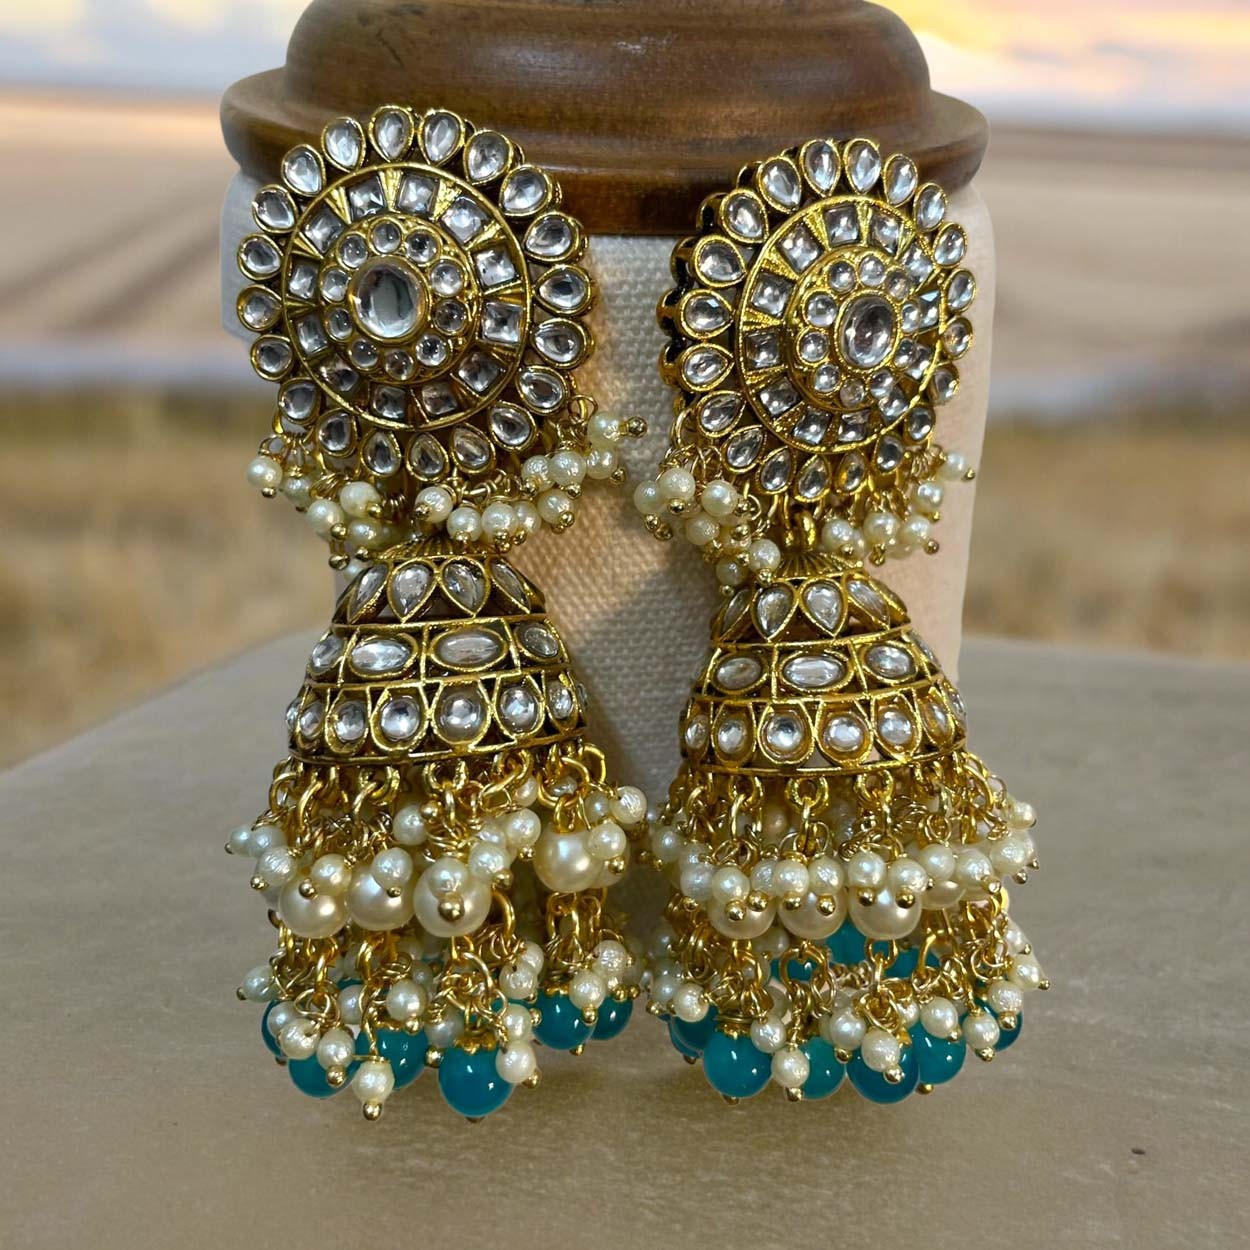 Imitation Kundan earrings - teal and pearl detailed